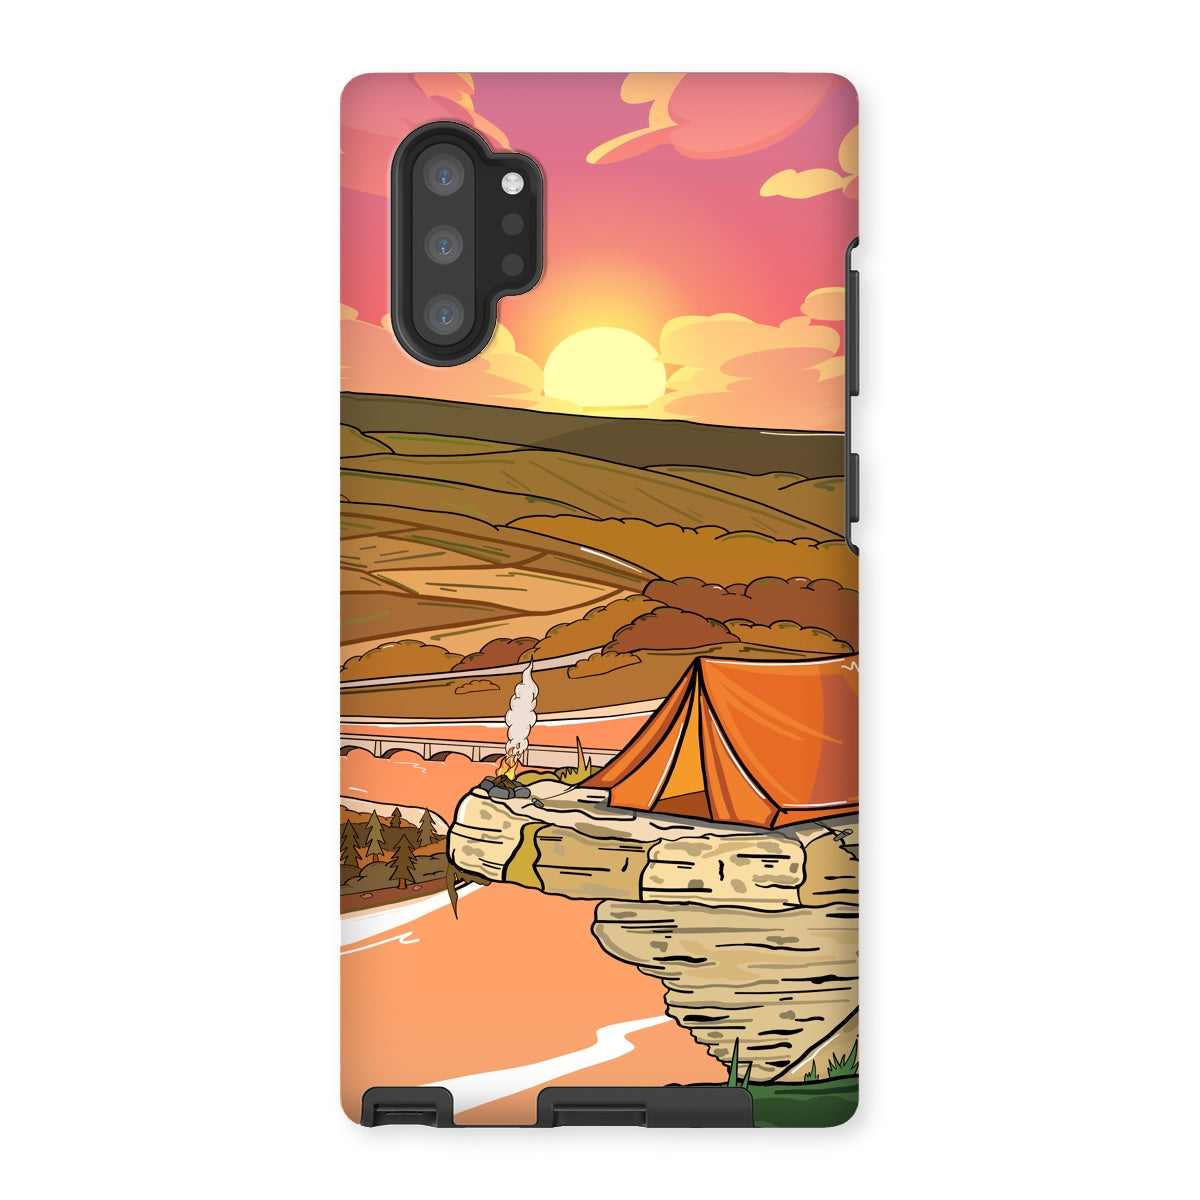 Bamford Edge - Into the sunset Tough Phone Case